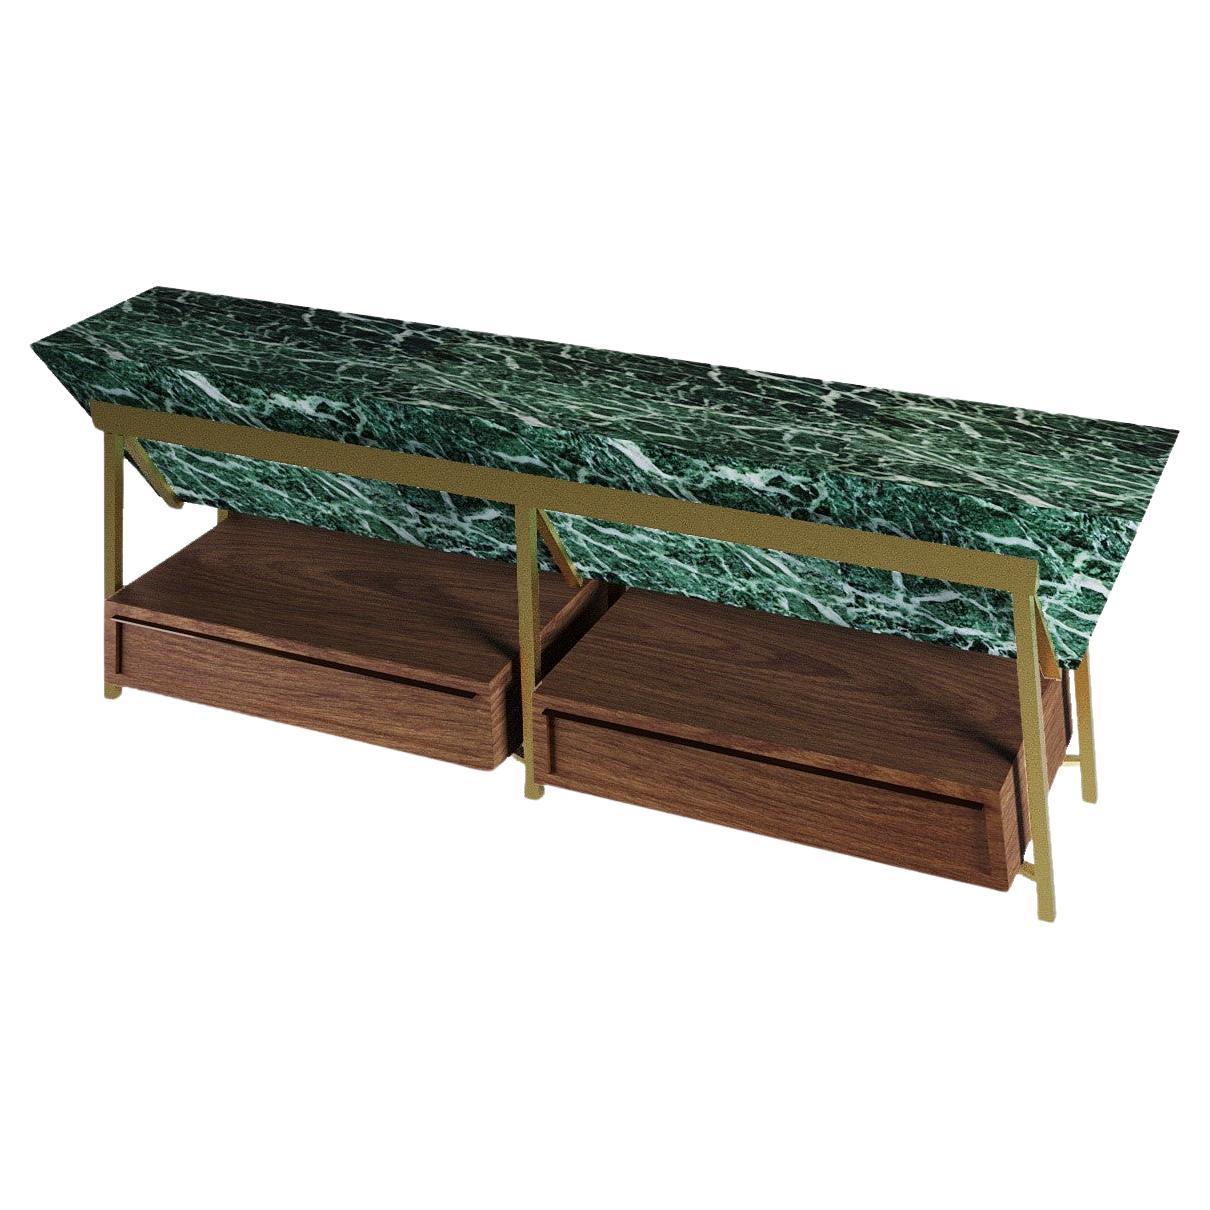 NORDST ANNE Console Table, Italian Green Lightning Marble, Danish Modern Design For Sale